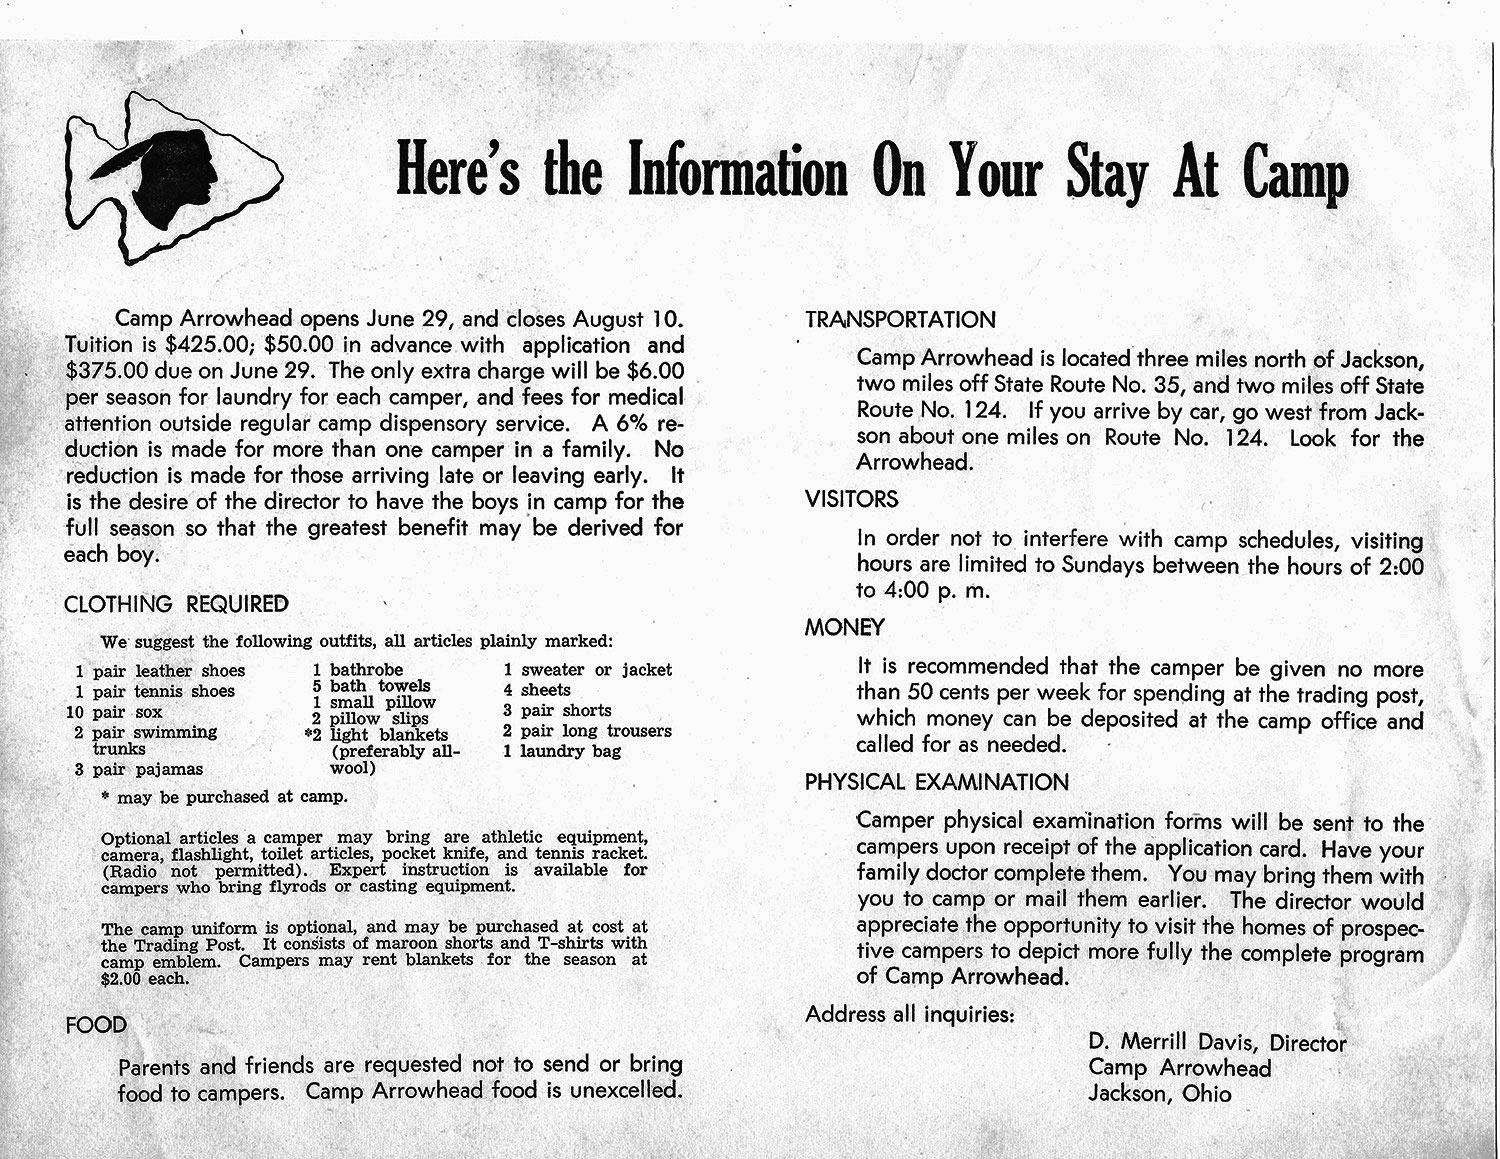 Camp Arrowhead Information Sheet